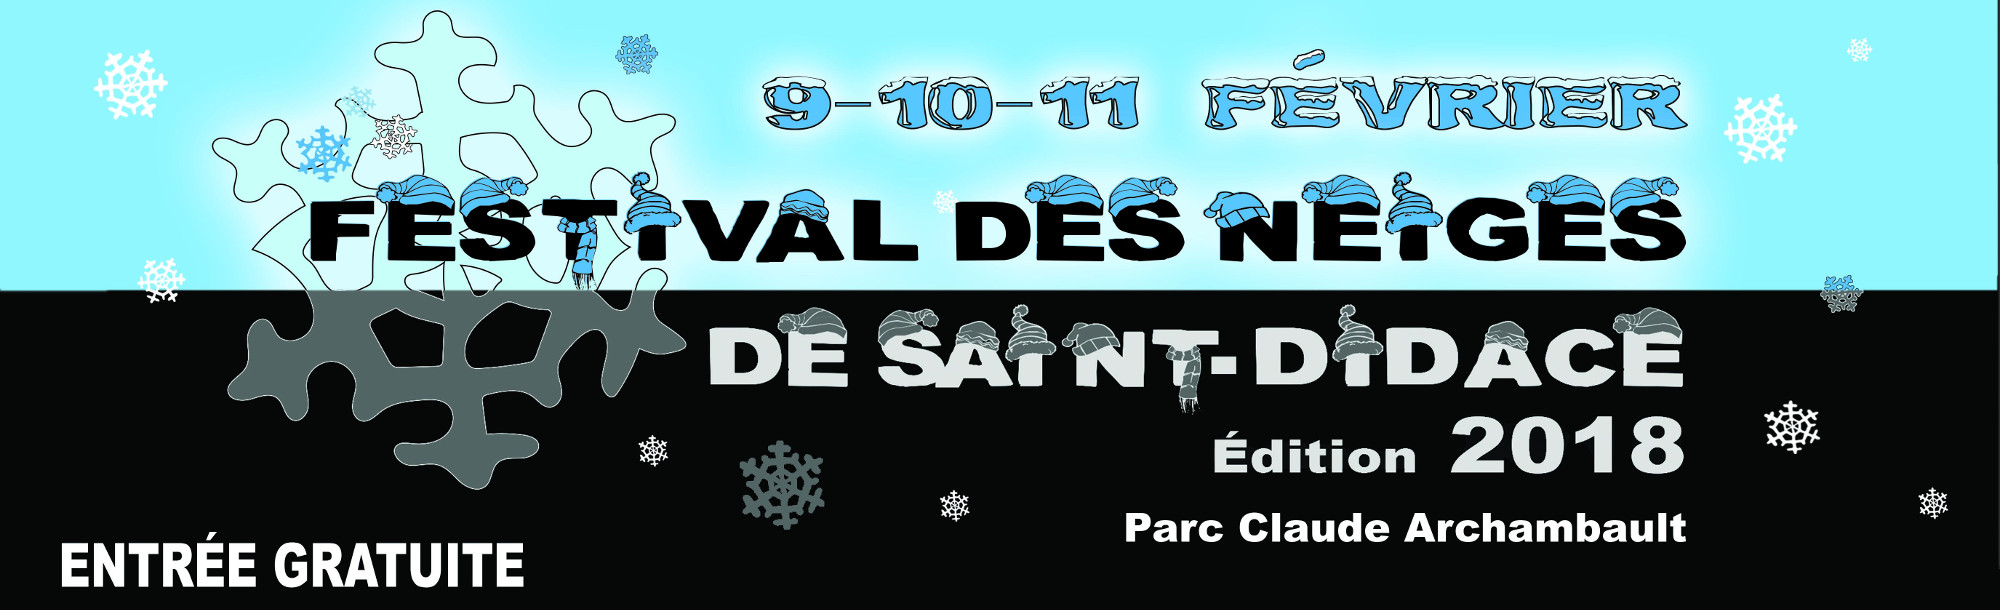 Festival des neiges - samedi le 10 février